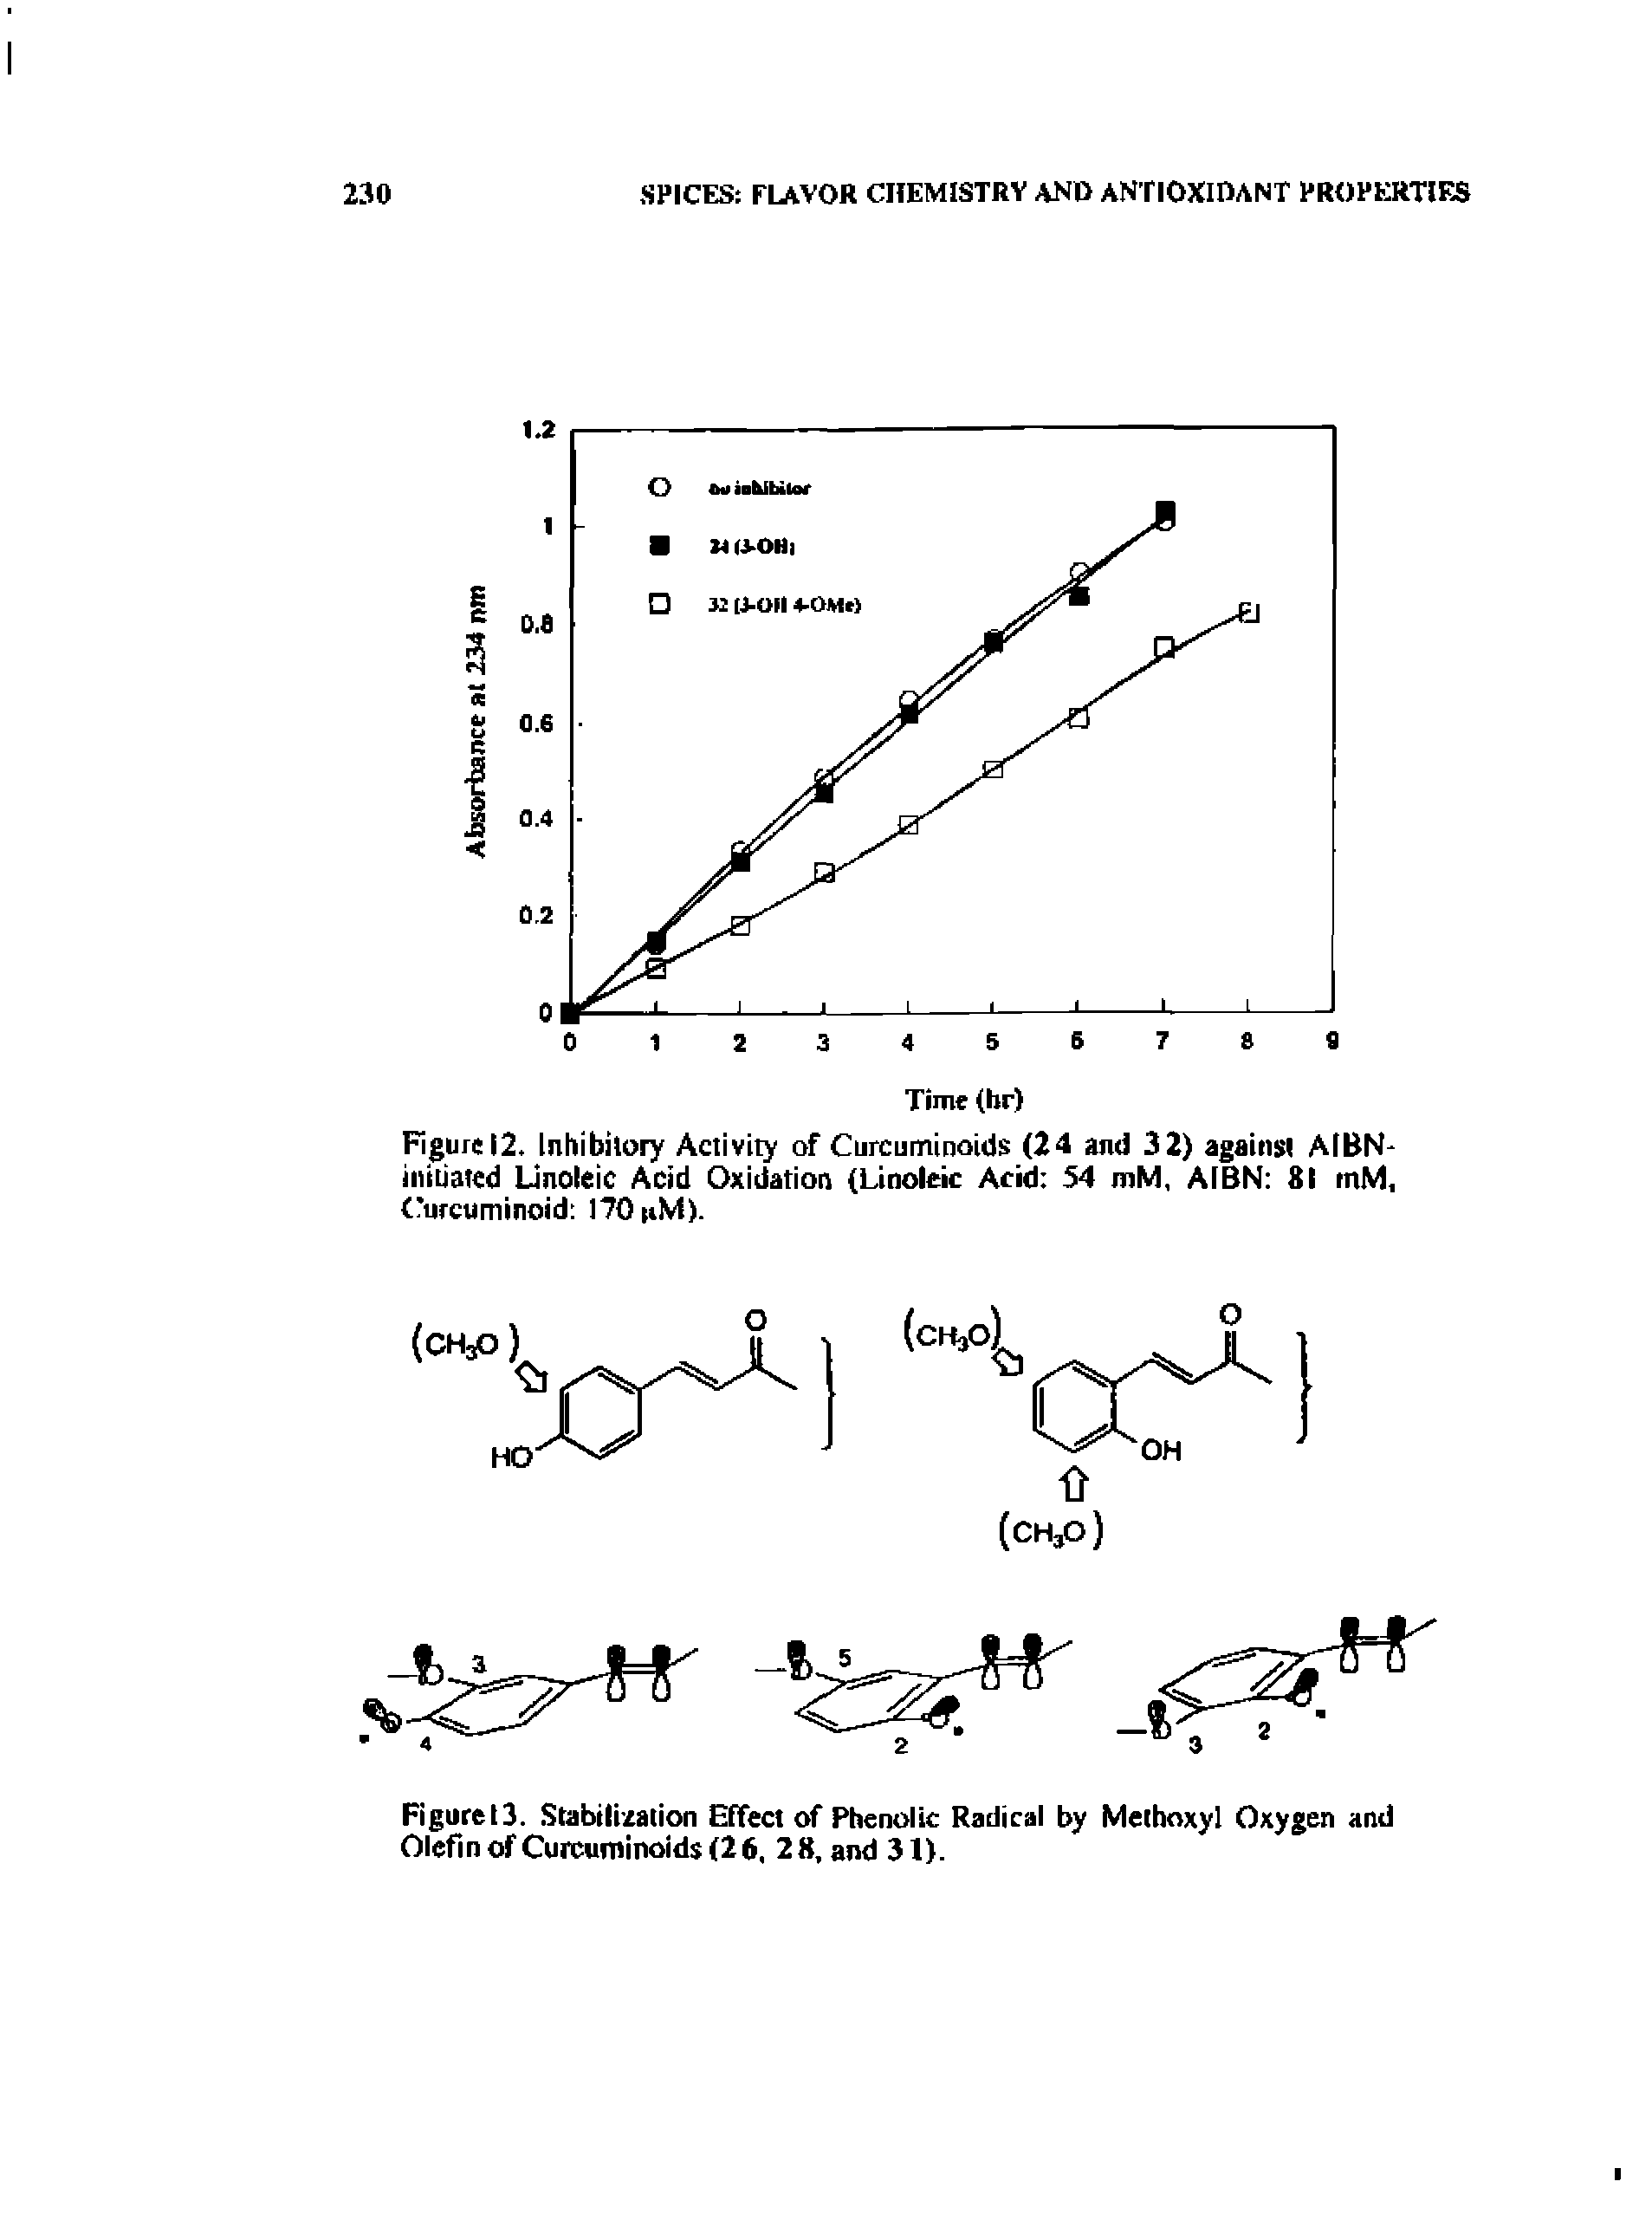 Figure 12. Inhibitory Activity of Curcuminolds (24 and 32 against AIBN initiated Linoleic Acid Oxidation (Linolcic Acid 54 mM, AIBN 81 mM, ( urcuminoid 170 tiM).